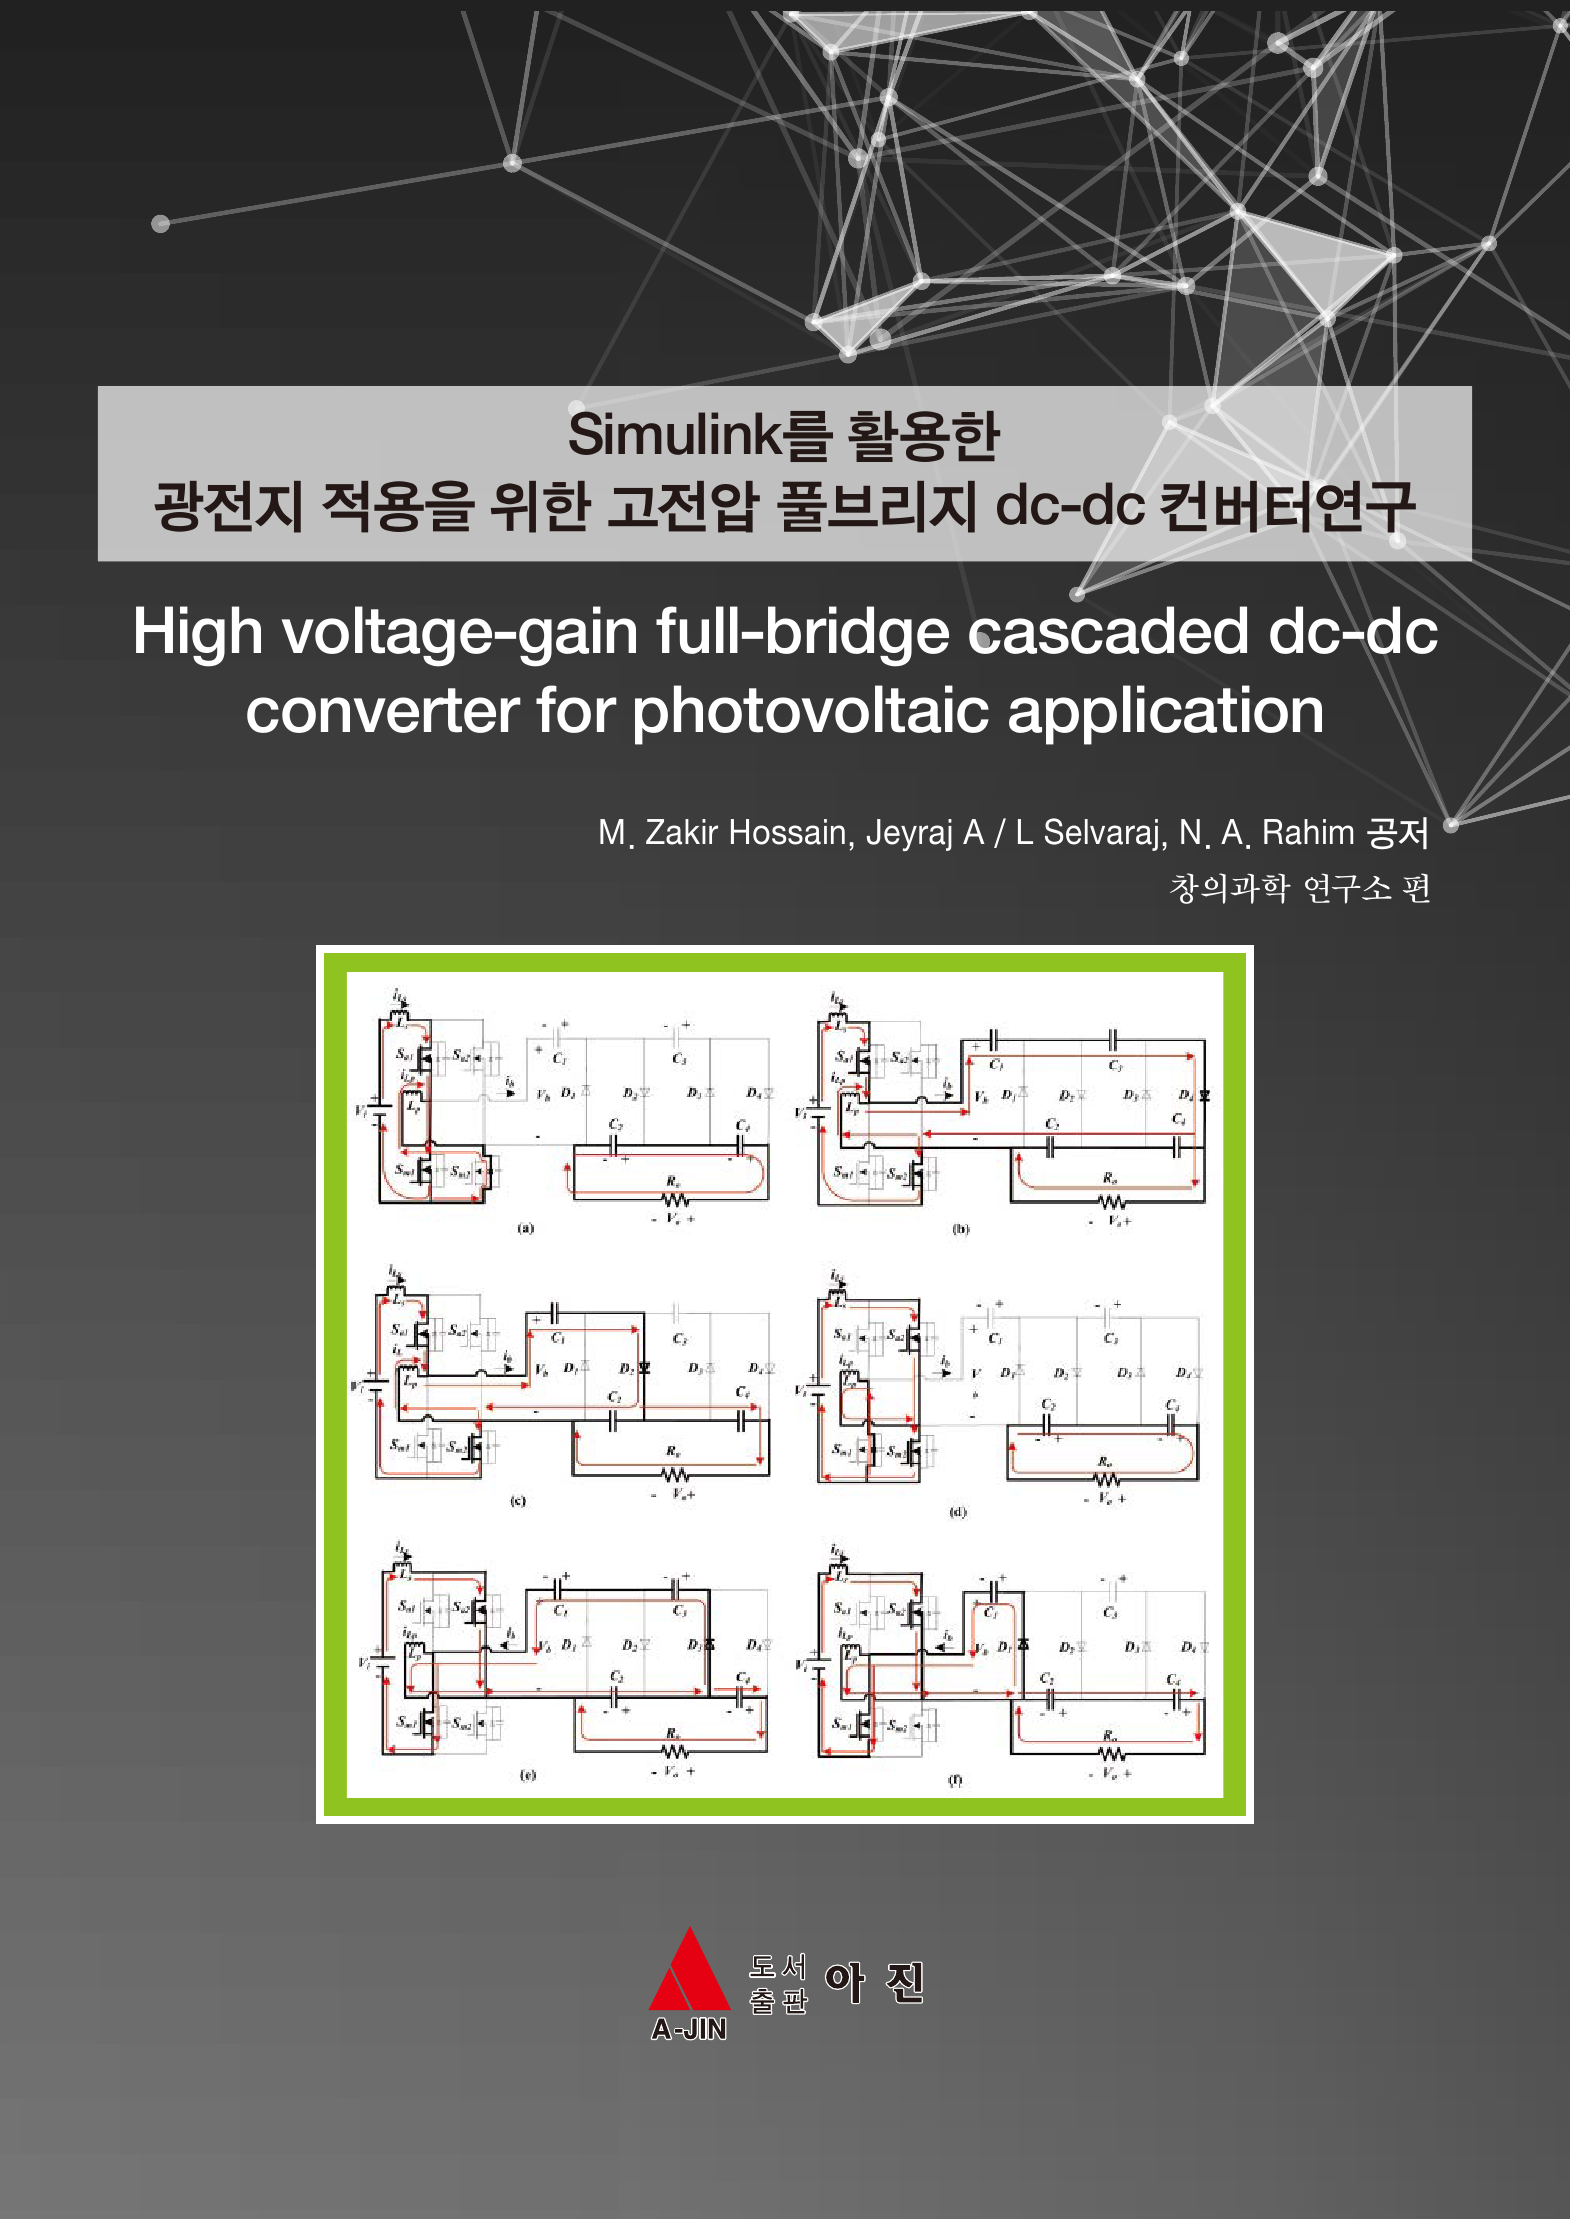 Simulink를 활용한 광전지 적용을 위한 고전압 풀브리지 dc-dc 컨버터연구(High voltage-gain full-bridge cascaded dc-dc converter for photovoltaic application)